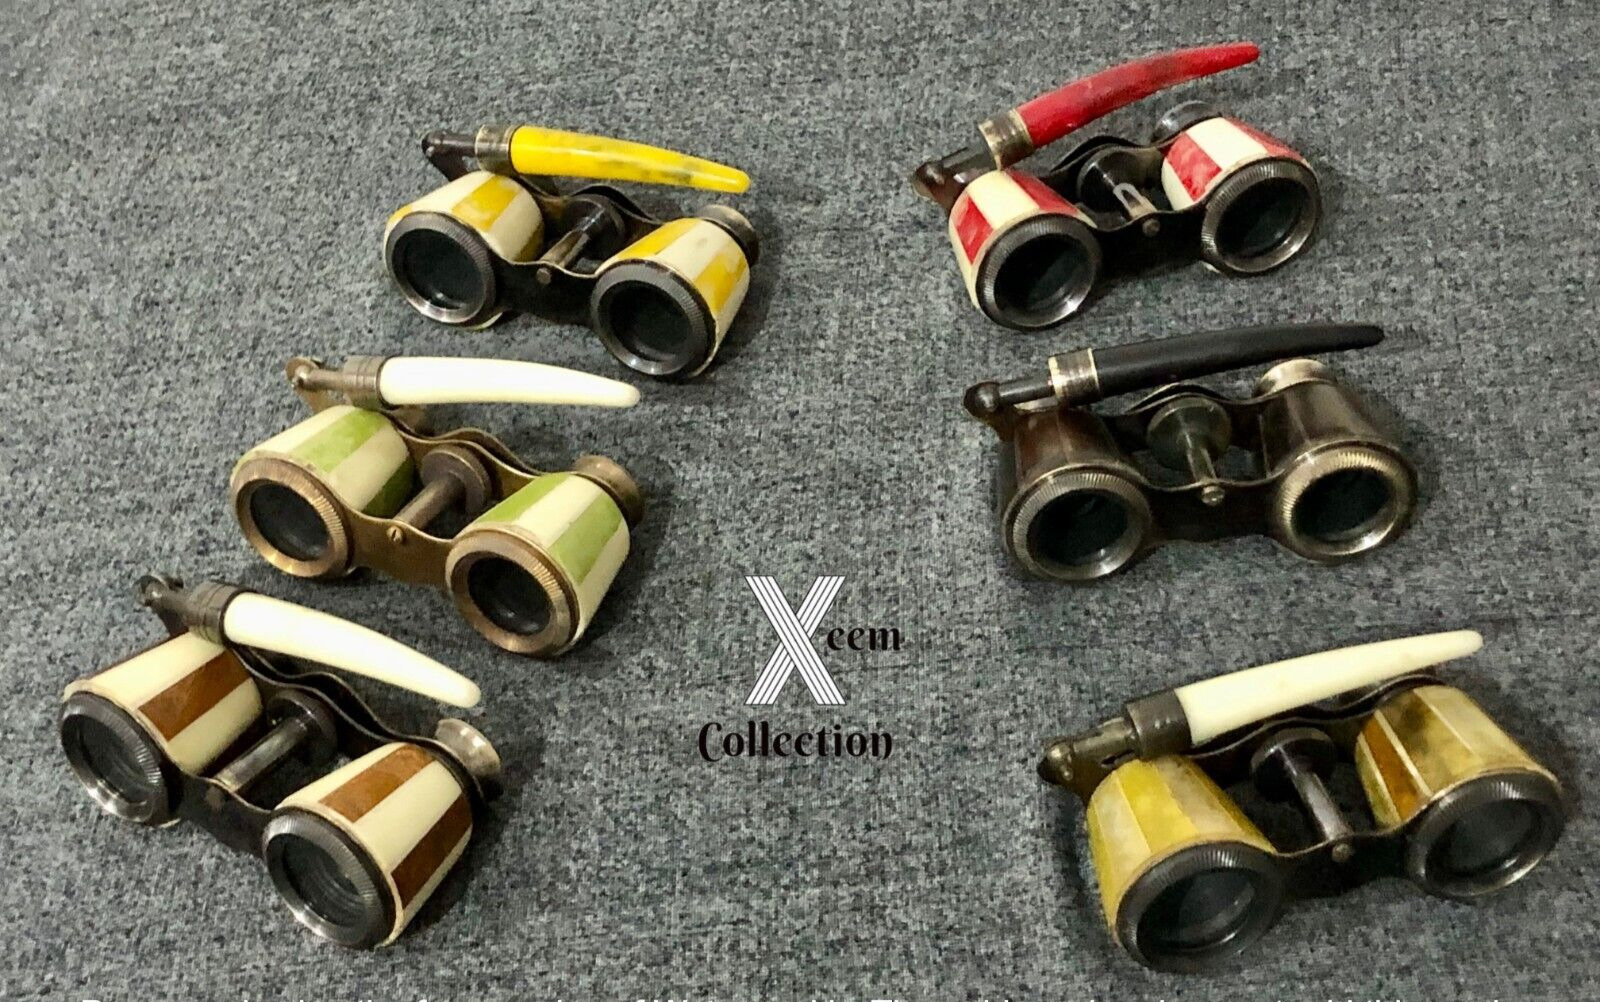 Lot of 6 Antique Brass Opera Glasses, Beautiful Colors, Latest Design Binoculars